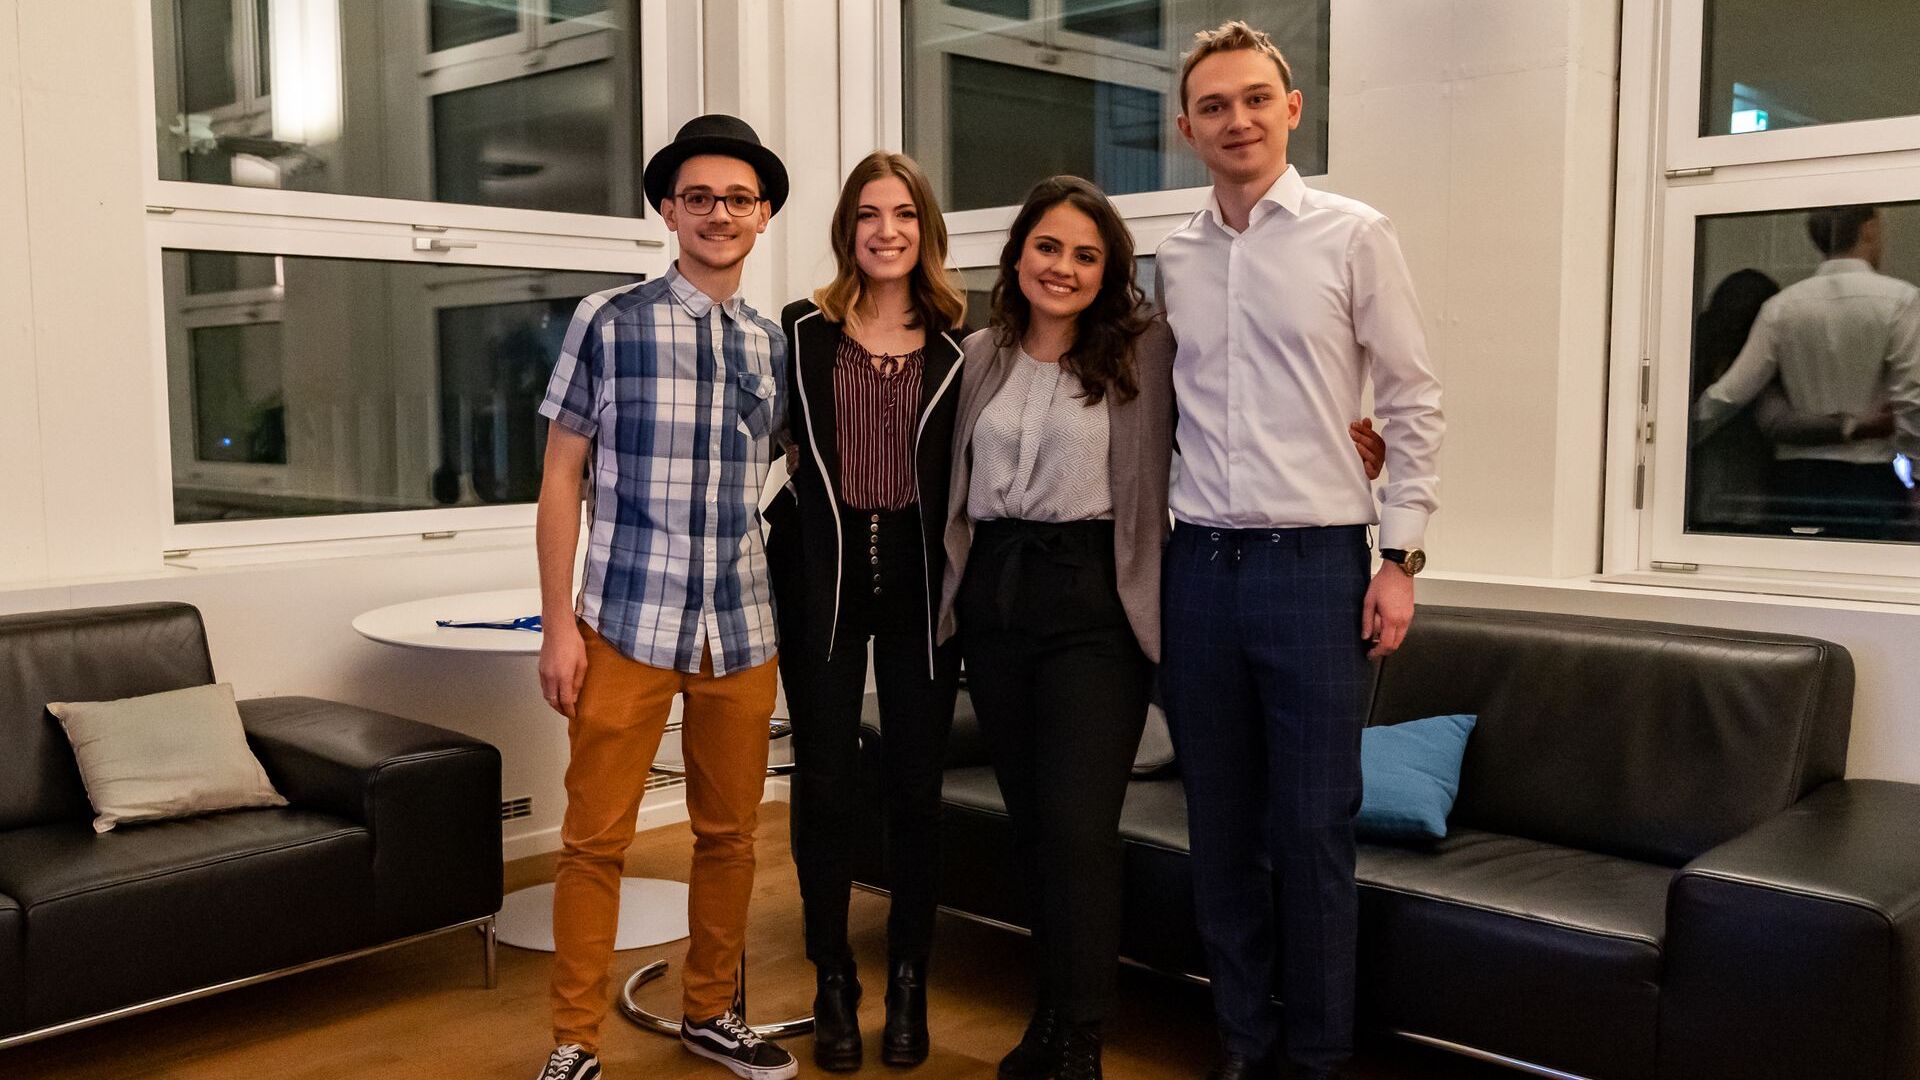 Amael Parreaux-Ey, Alessandra Capurro, Flavia Wallenhorst et Alexander Corin ont été finalistes du classement "NextGen Hero" au "Digital Economy Award" 2021